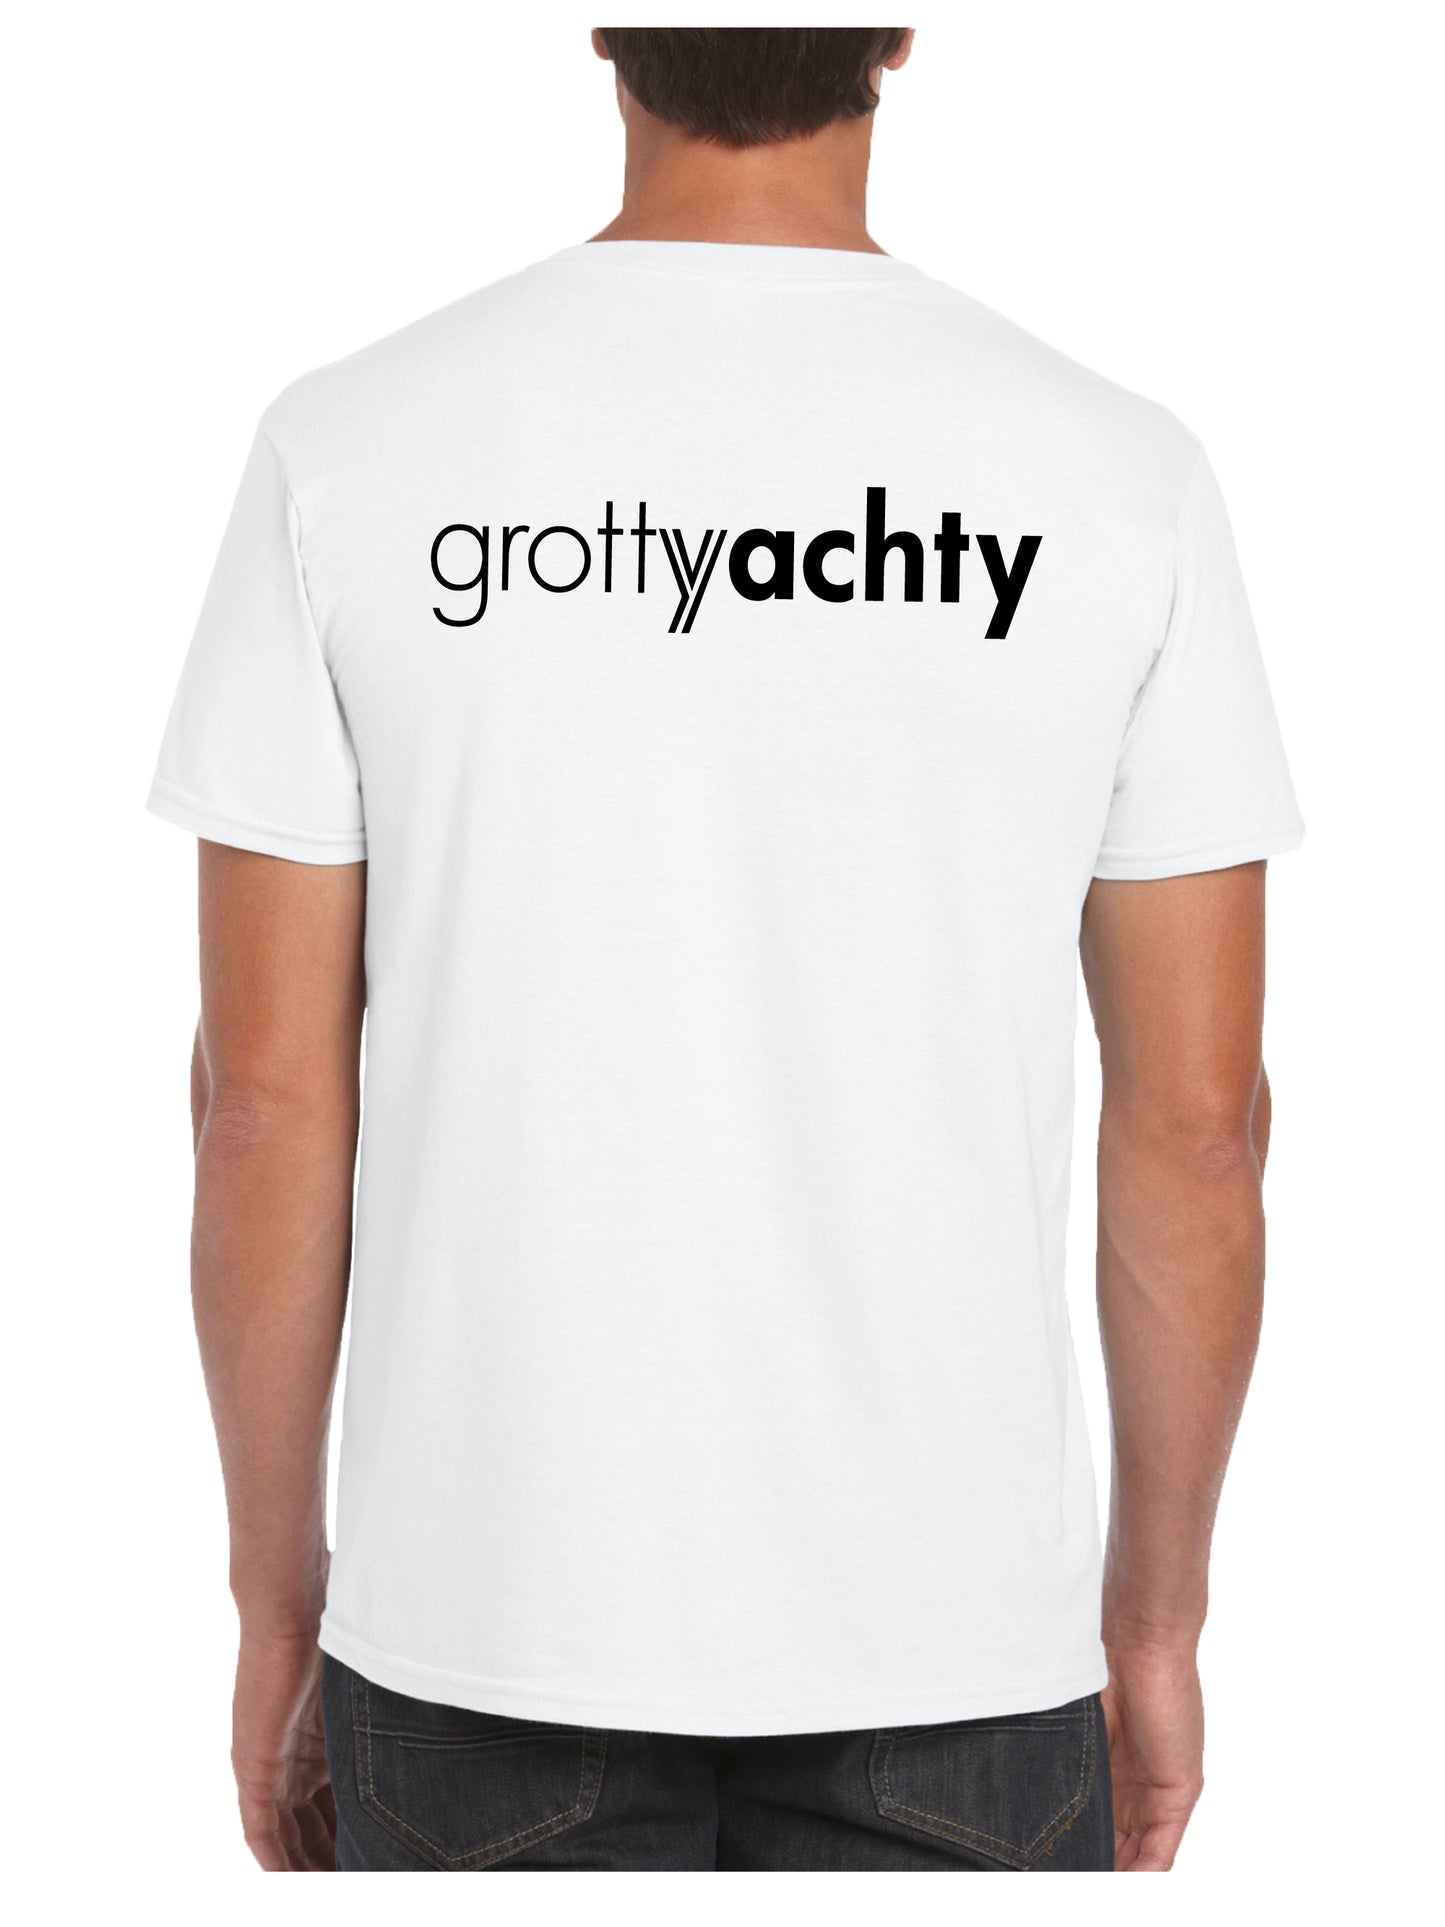 Grotty Yachty Word